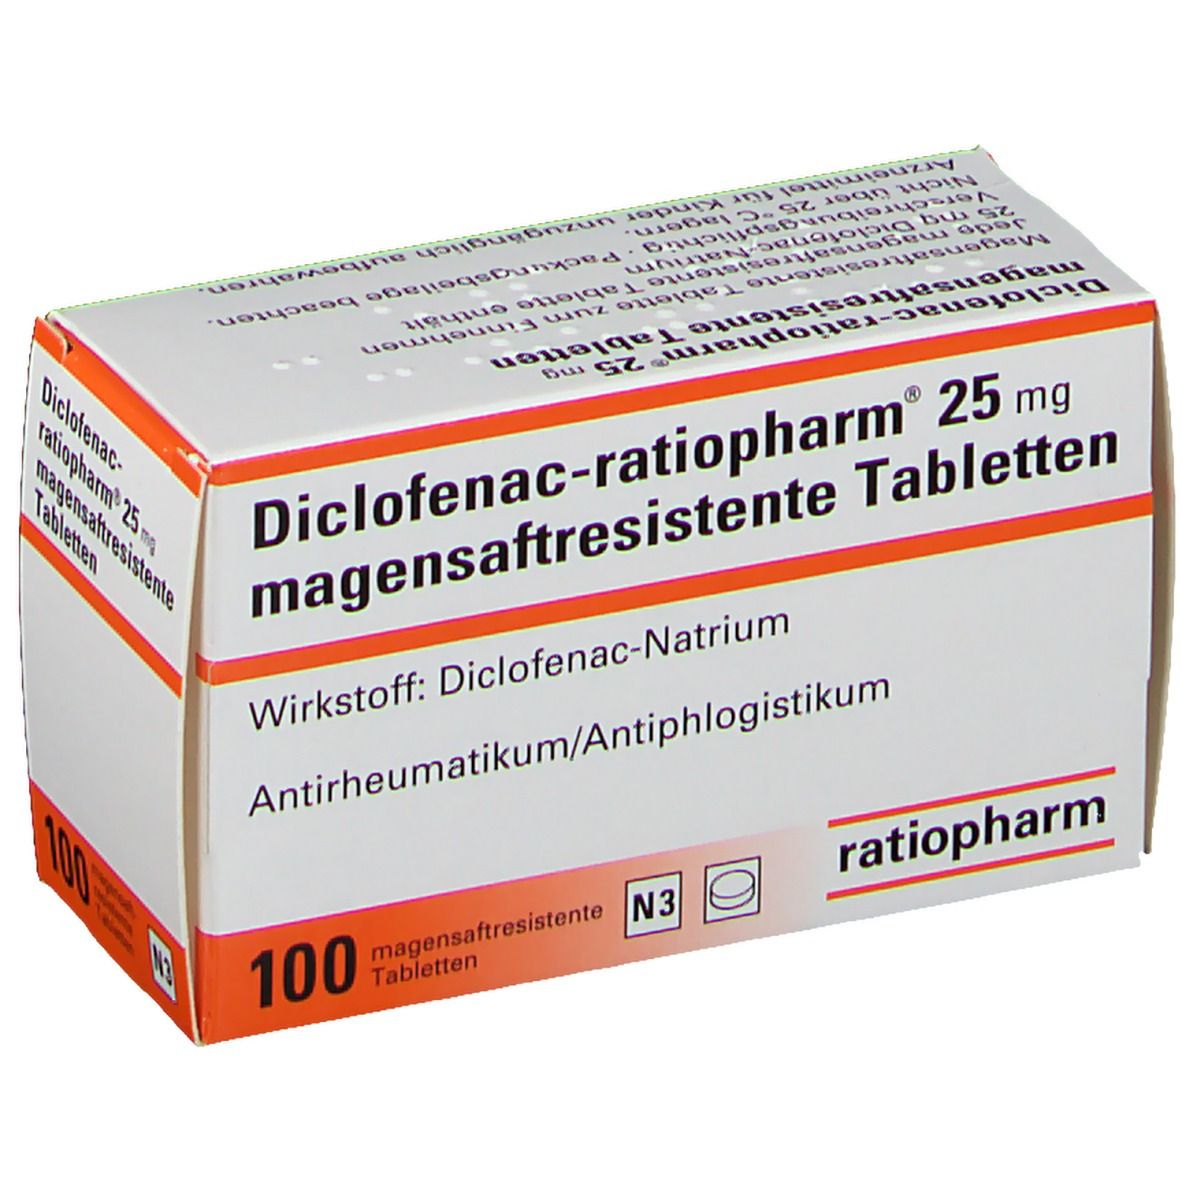 Diclofenac-ratiopharm® 25 mg